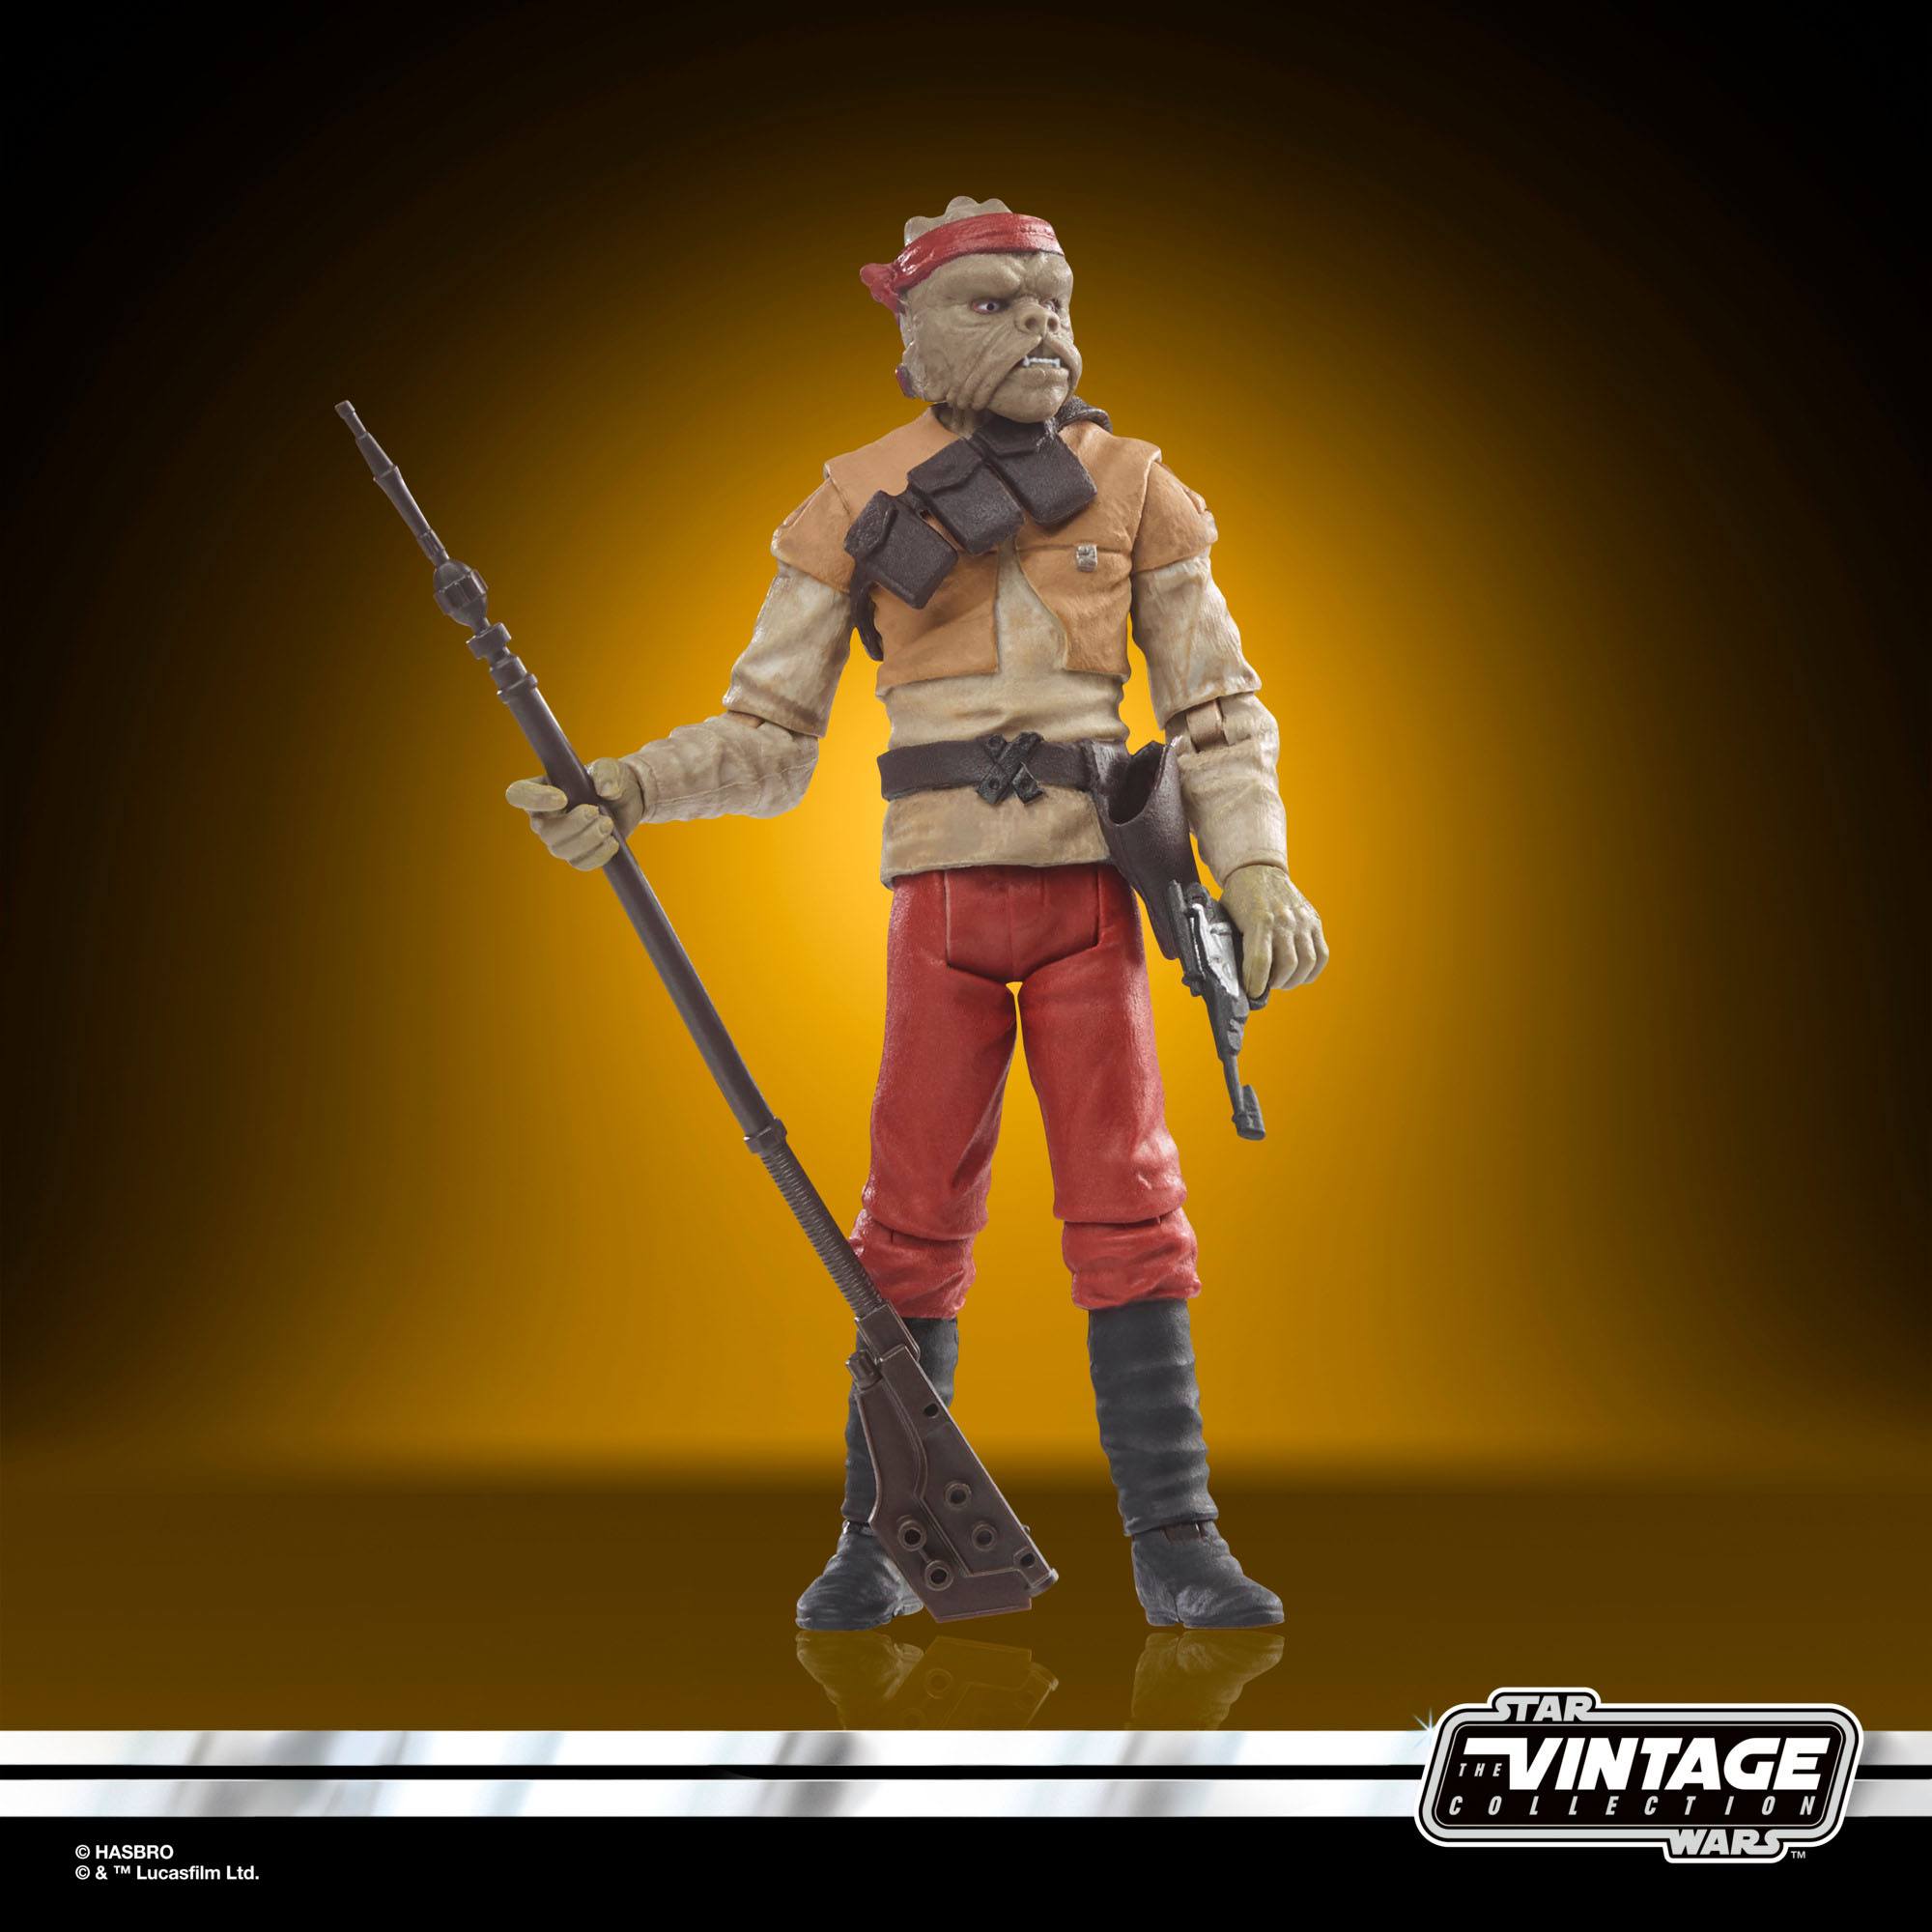 Star Wars Episode VI Vintage Collection Actionfigur Kithaba (Skiff Guard) 10 cm F73385L00 5010996124777